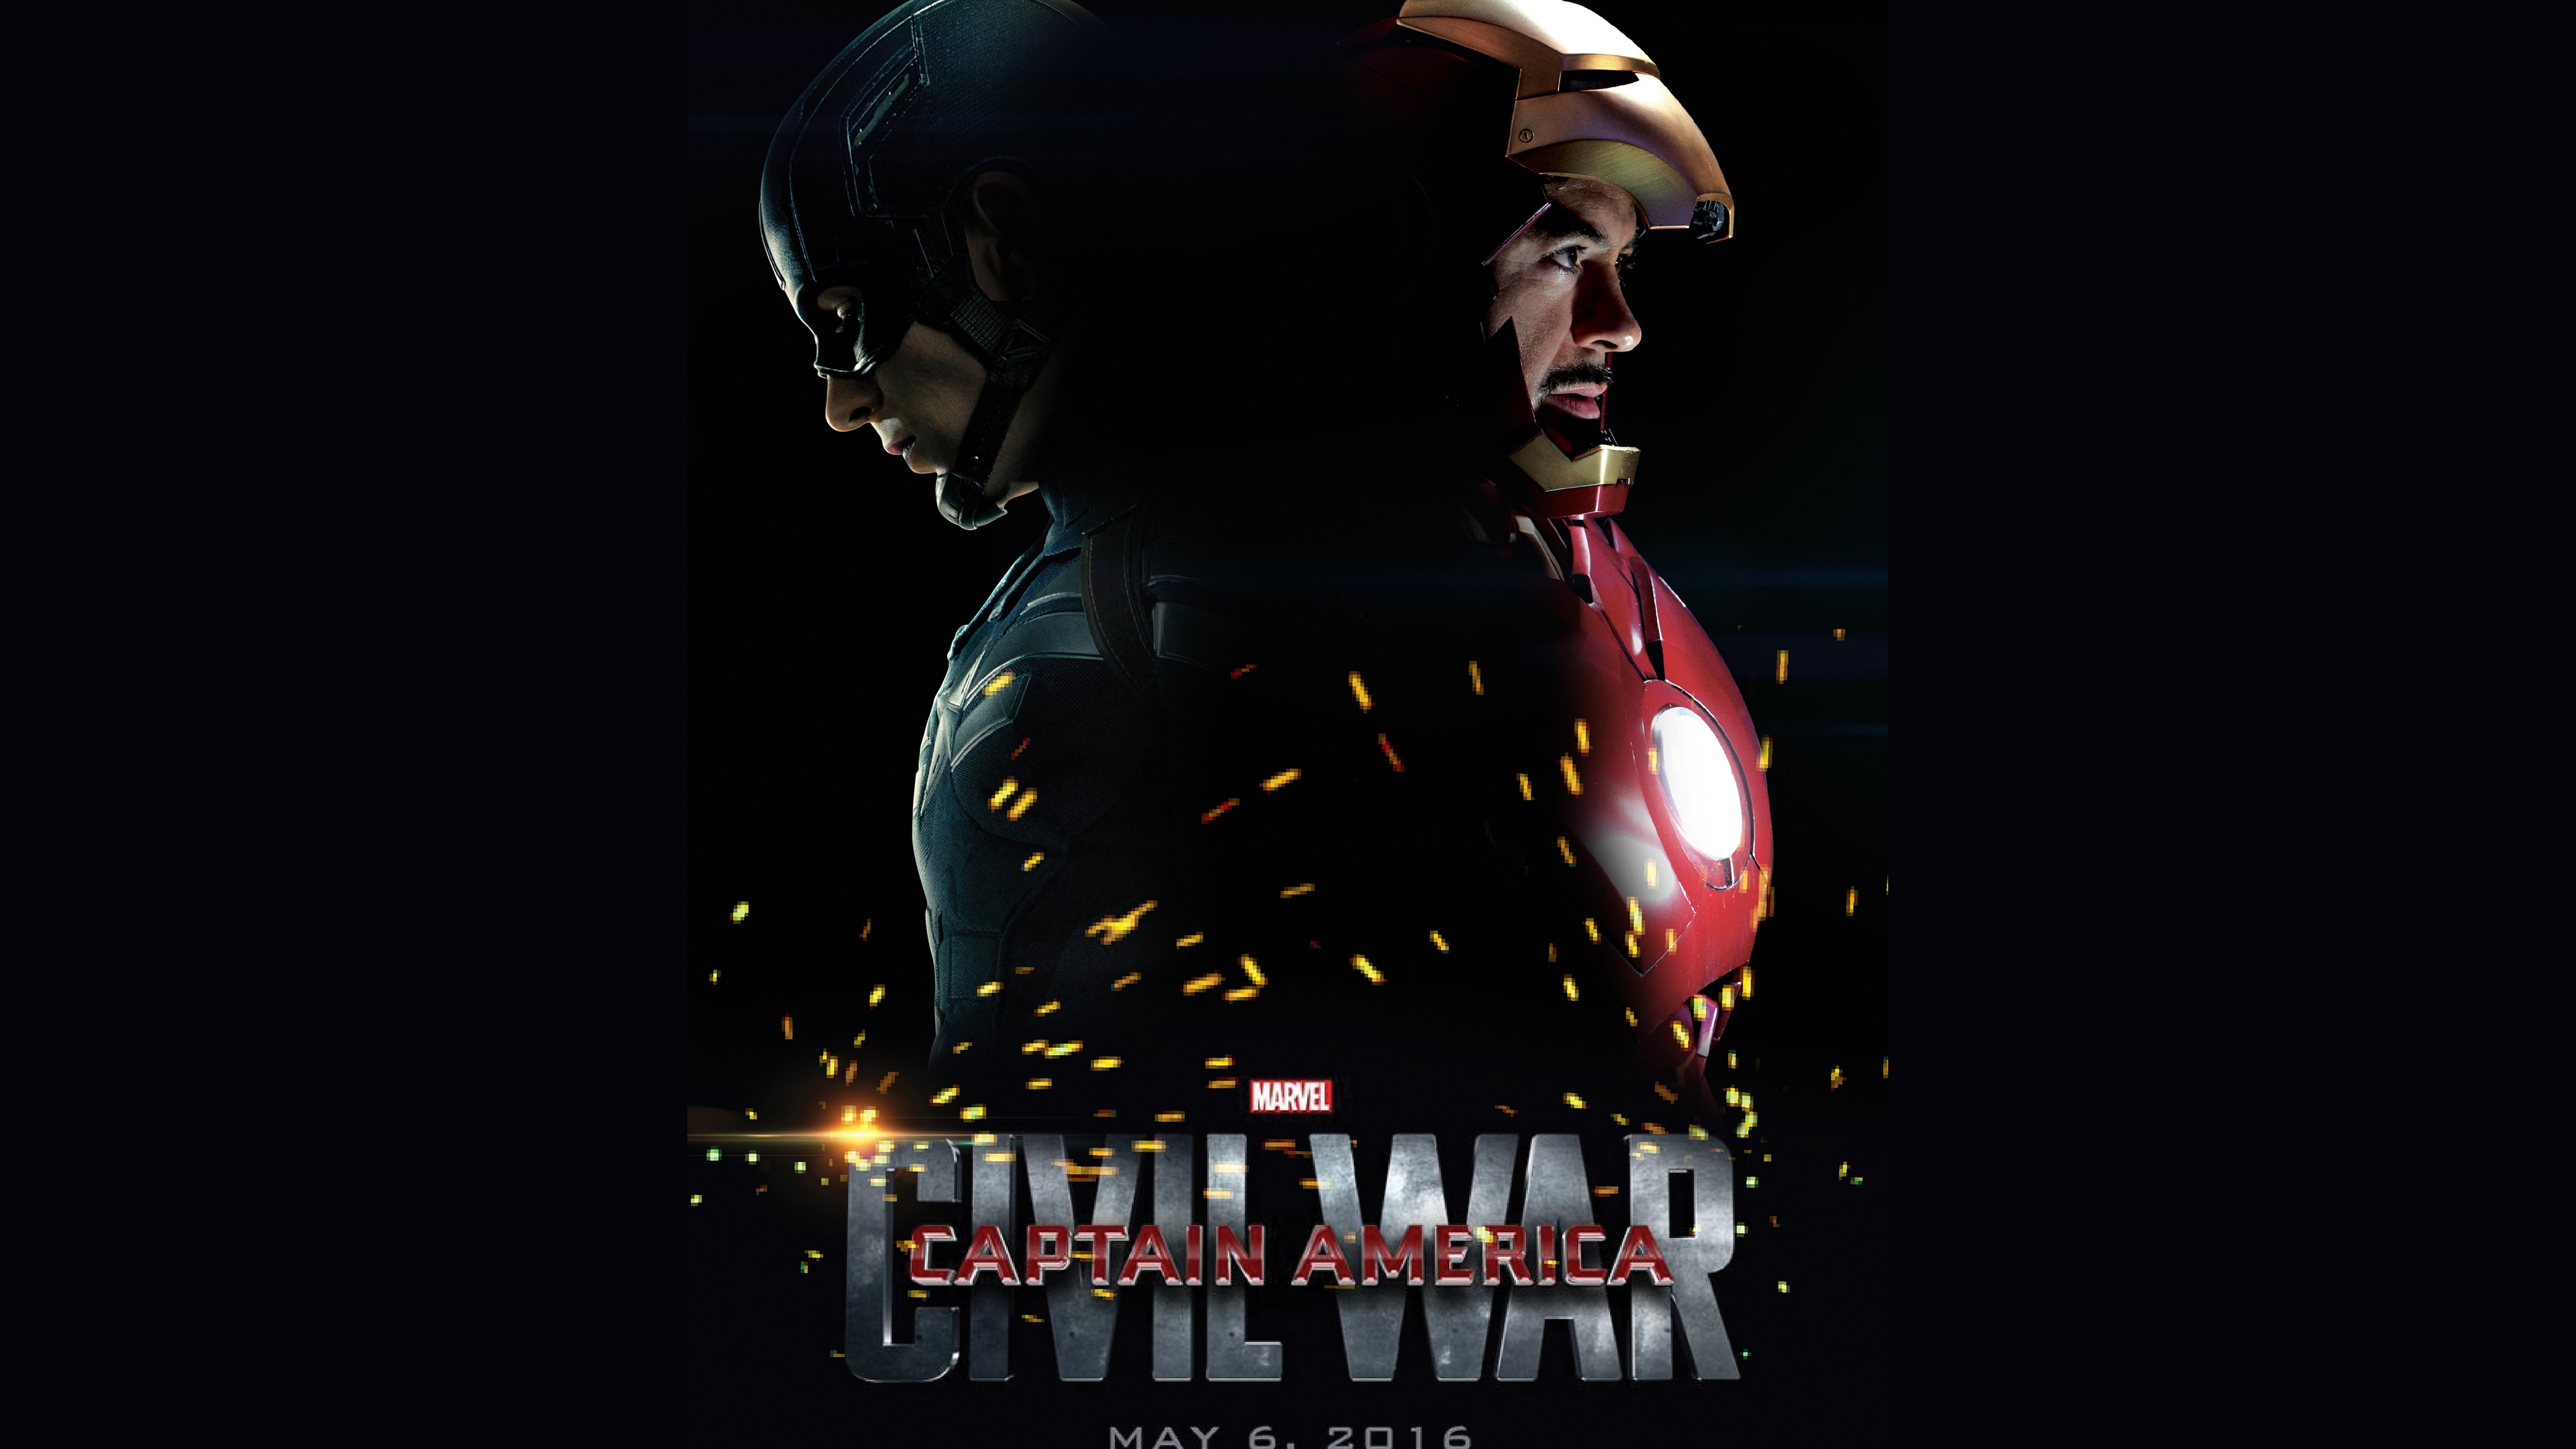 Captain America Civil War 2016 for 3840 x 2160 Ultra HD resolution